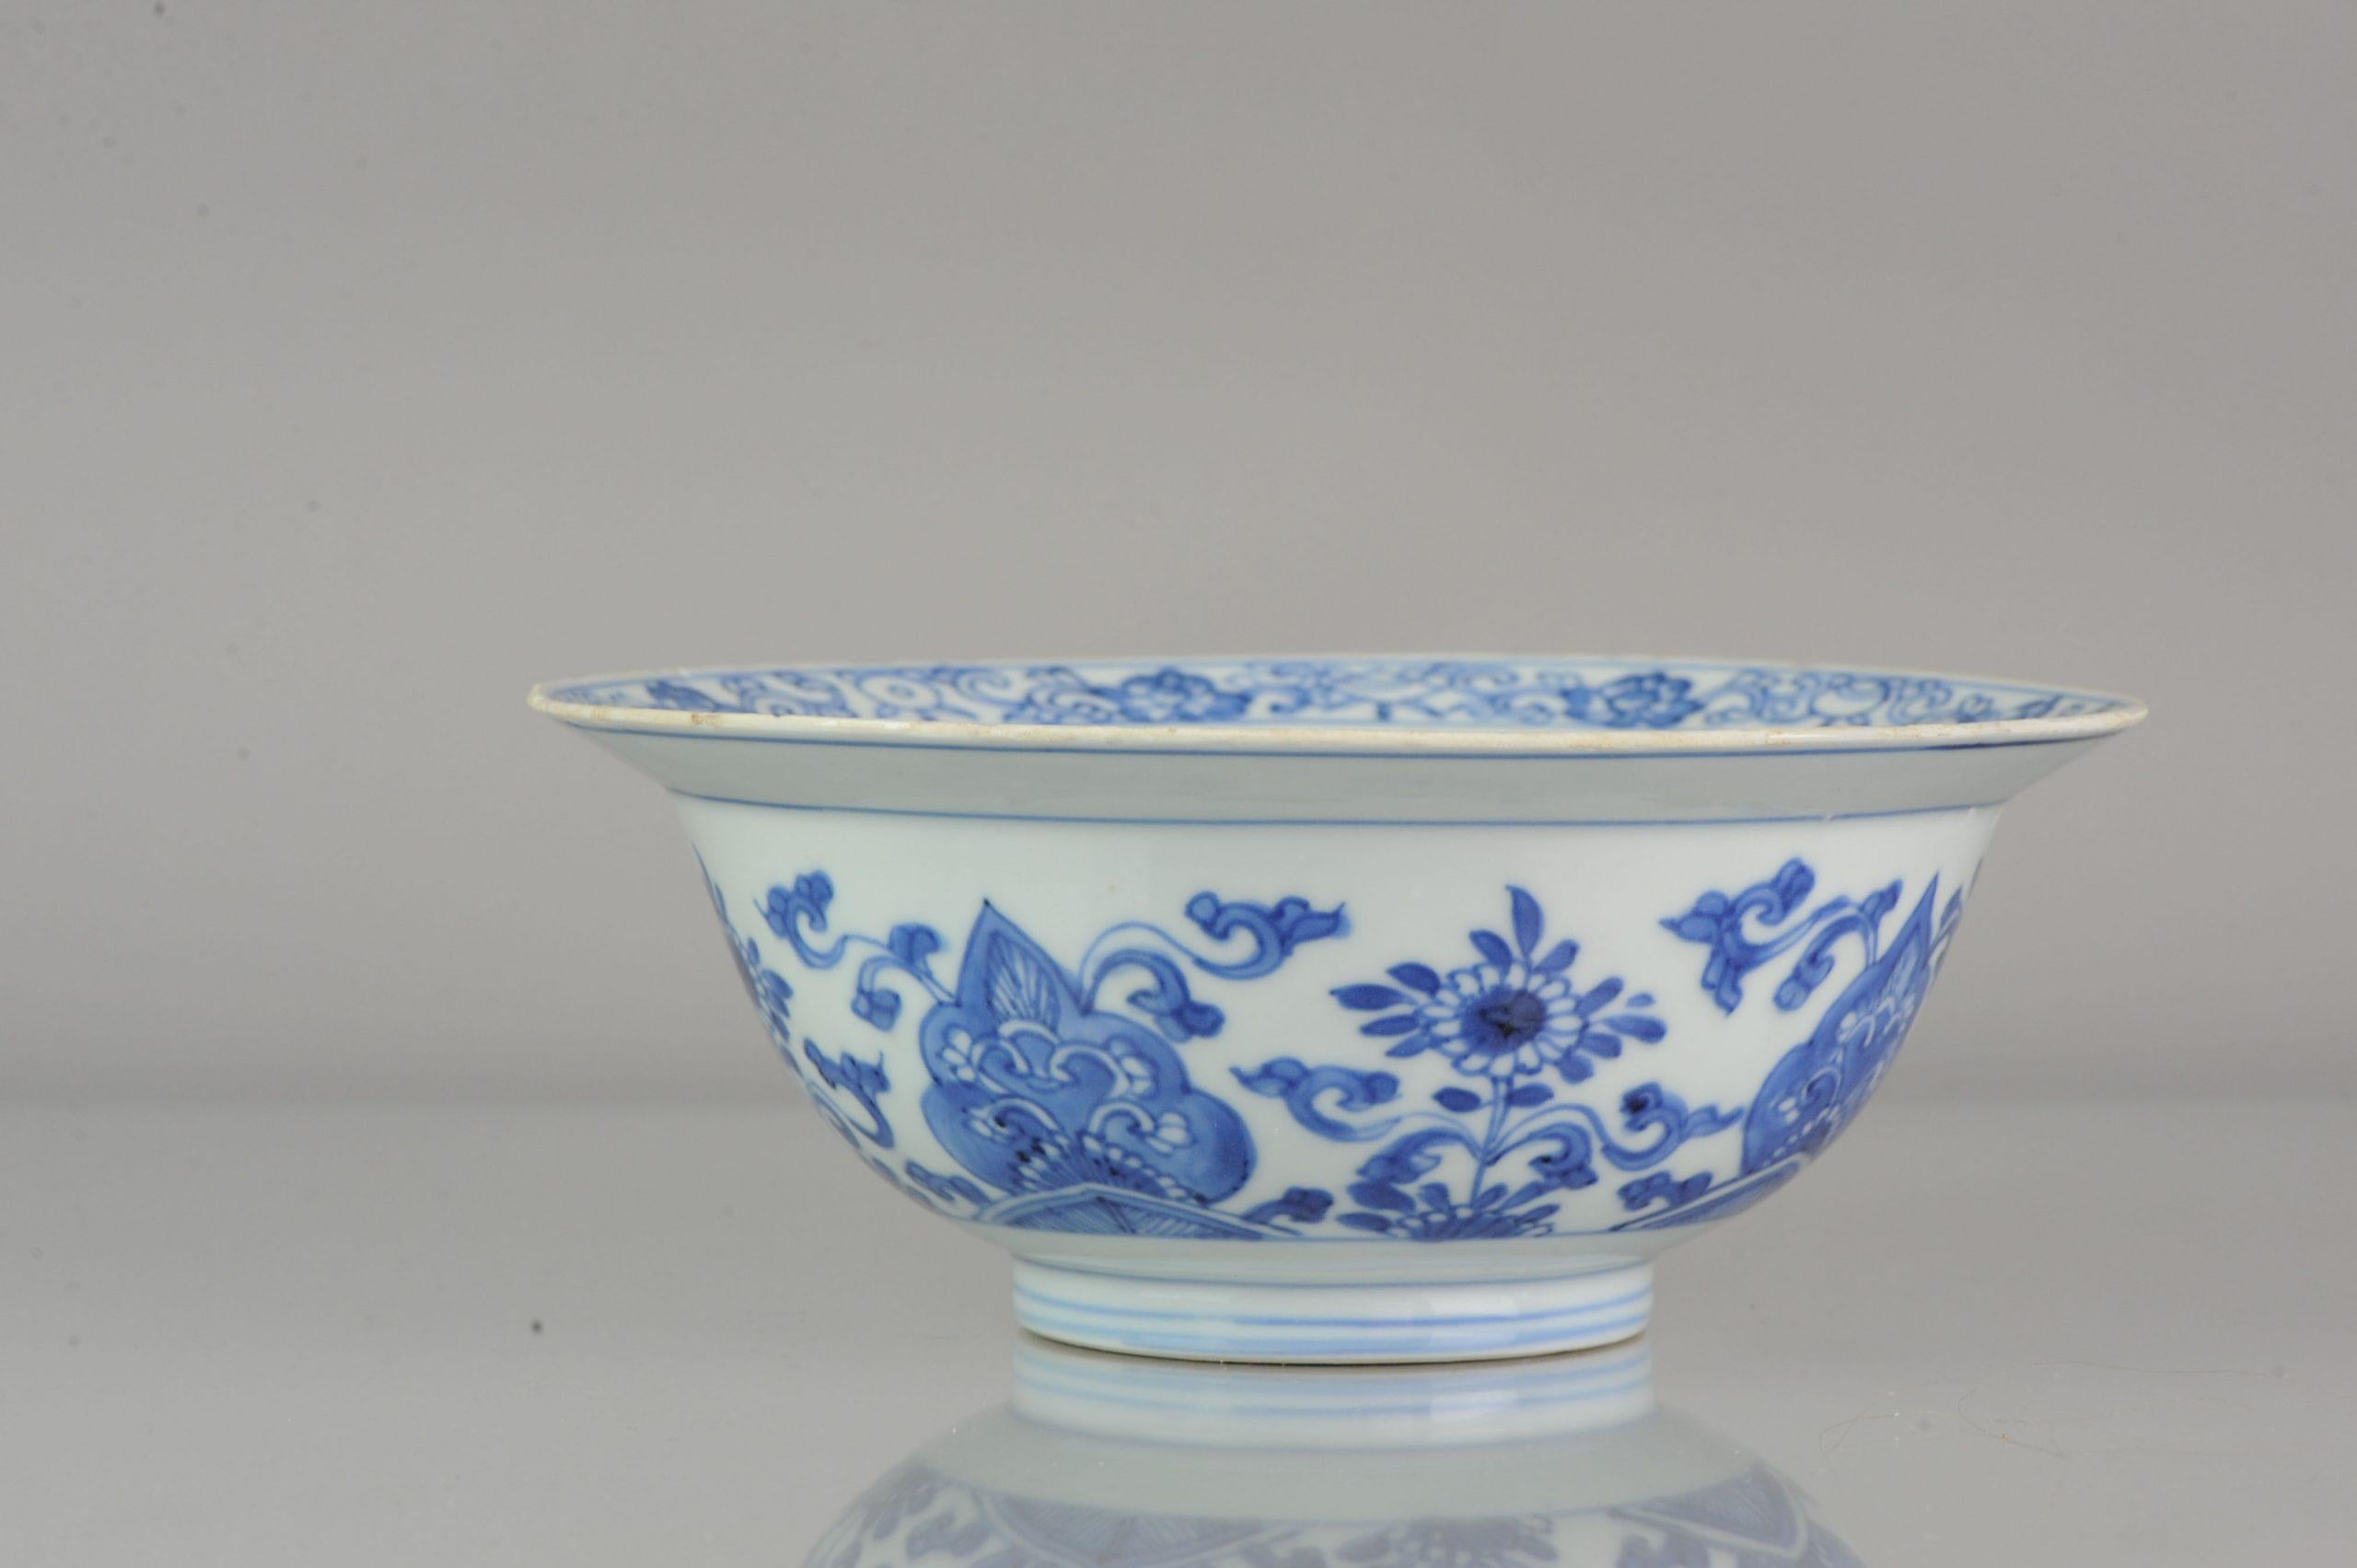 Porcelain Big Antique Chinese Arabic Style Klapmuts Blue White China Dish